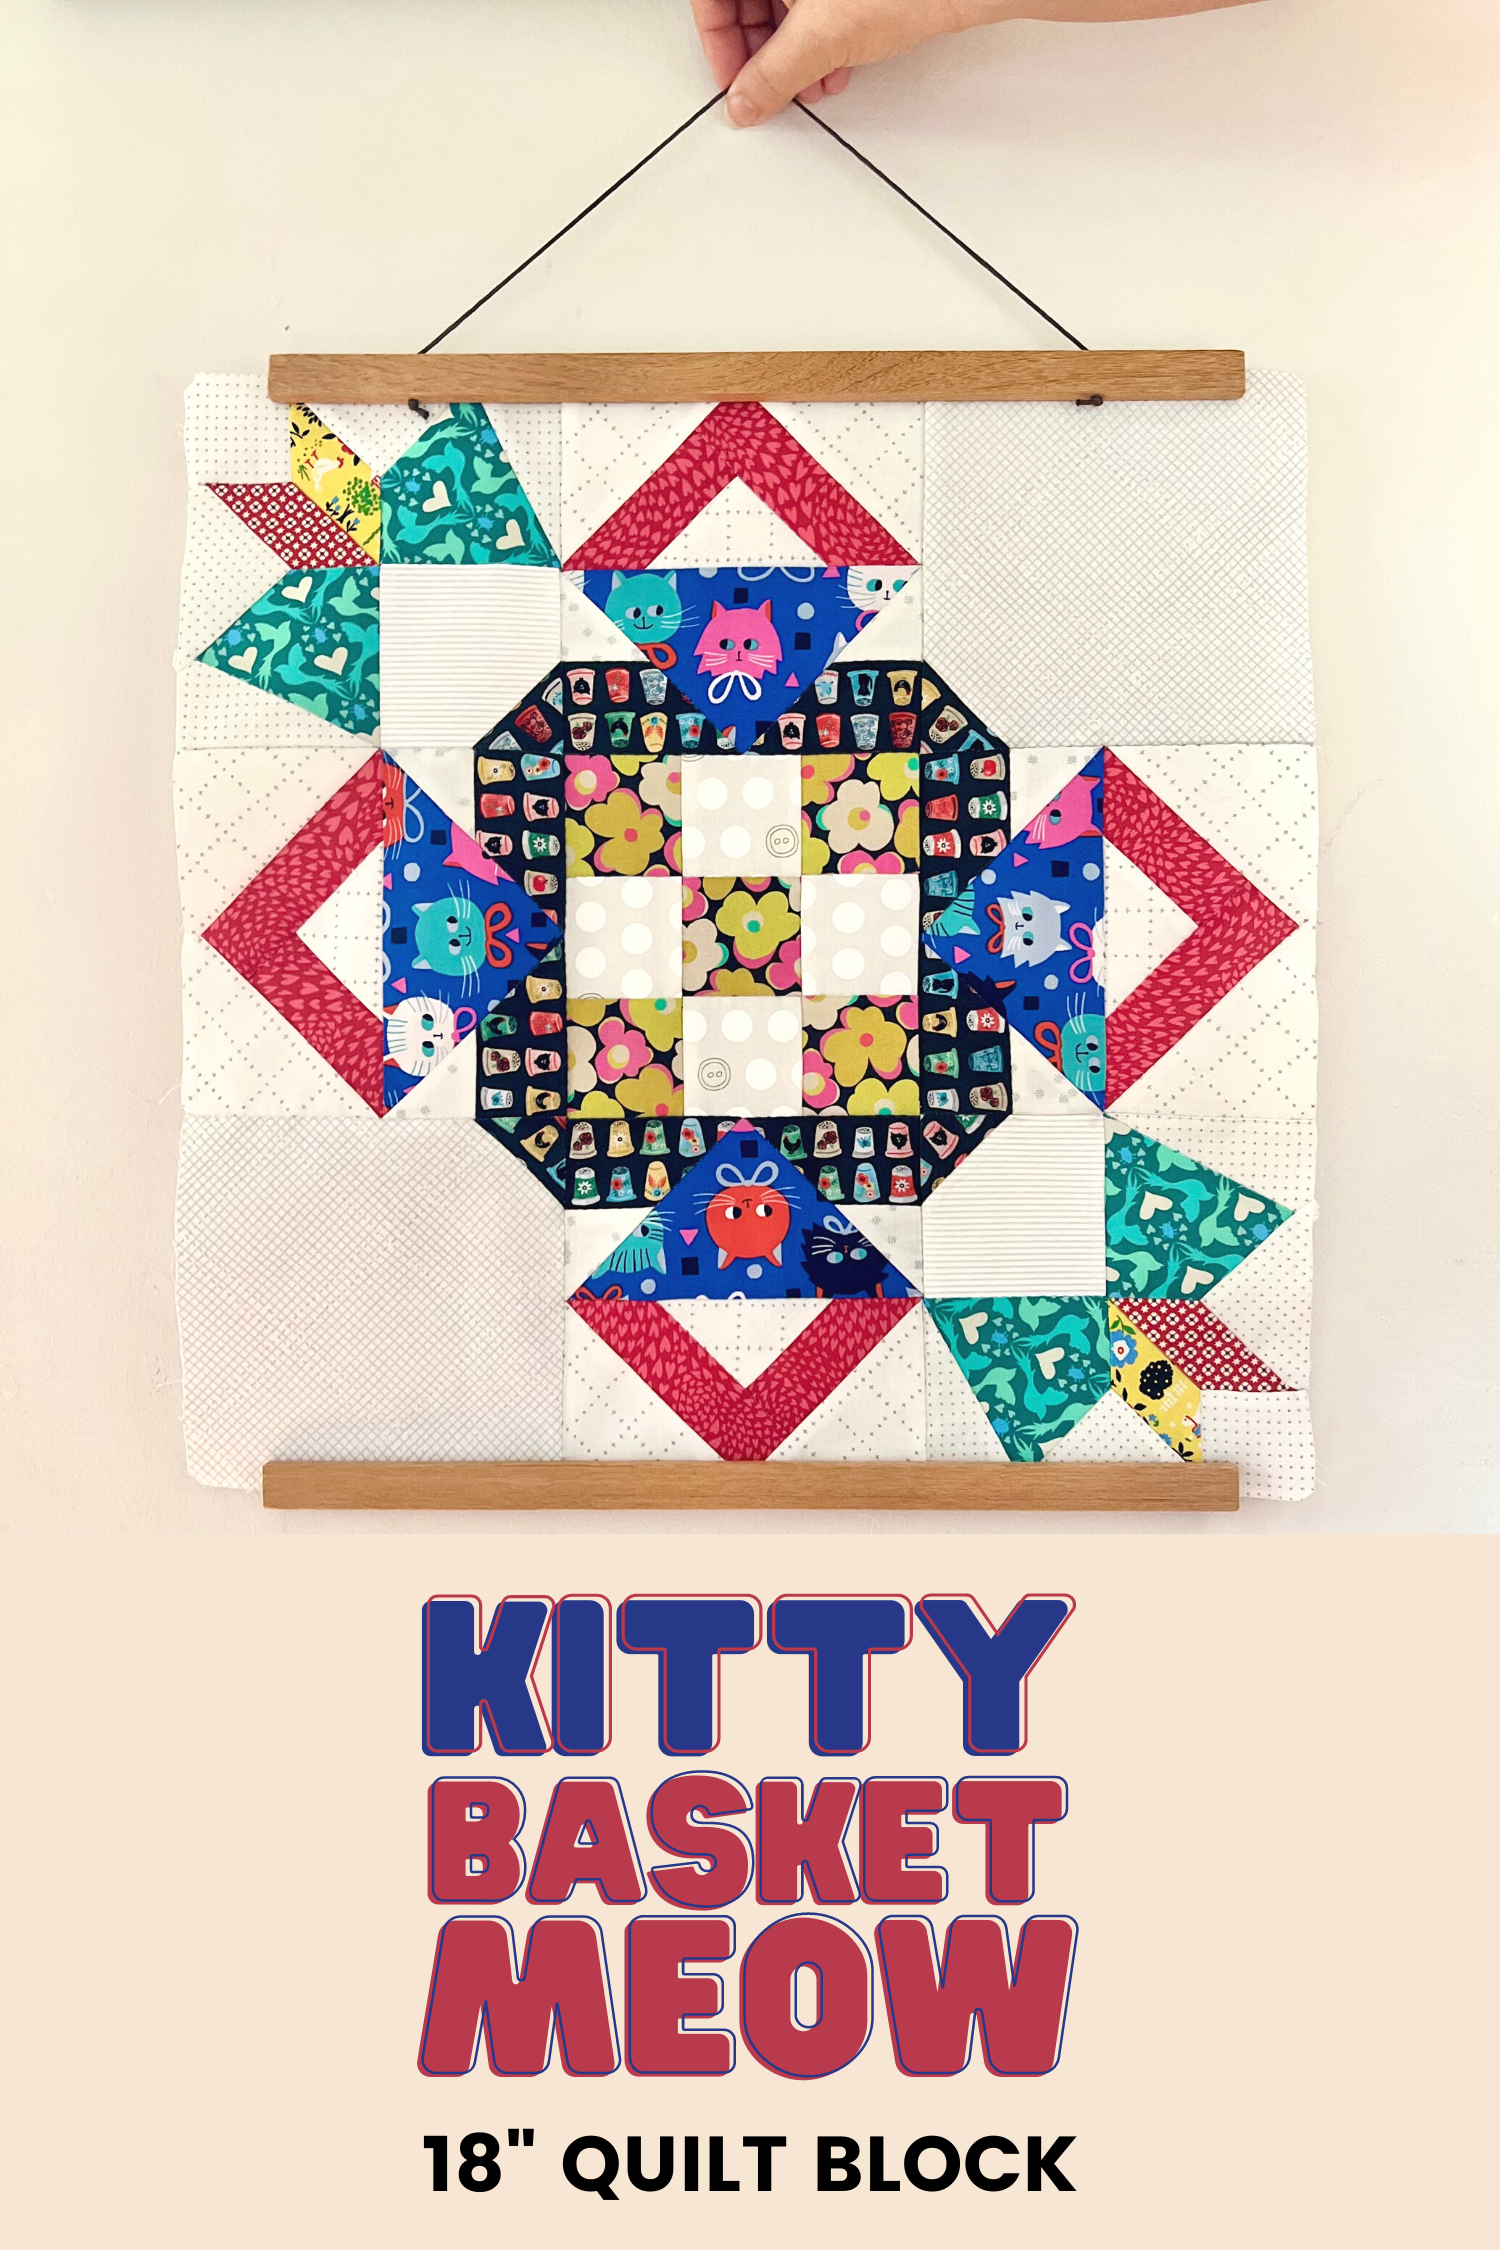 Craftapalooza DesignsKitty Basket Meow quilt block